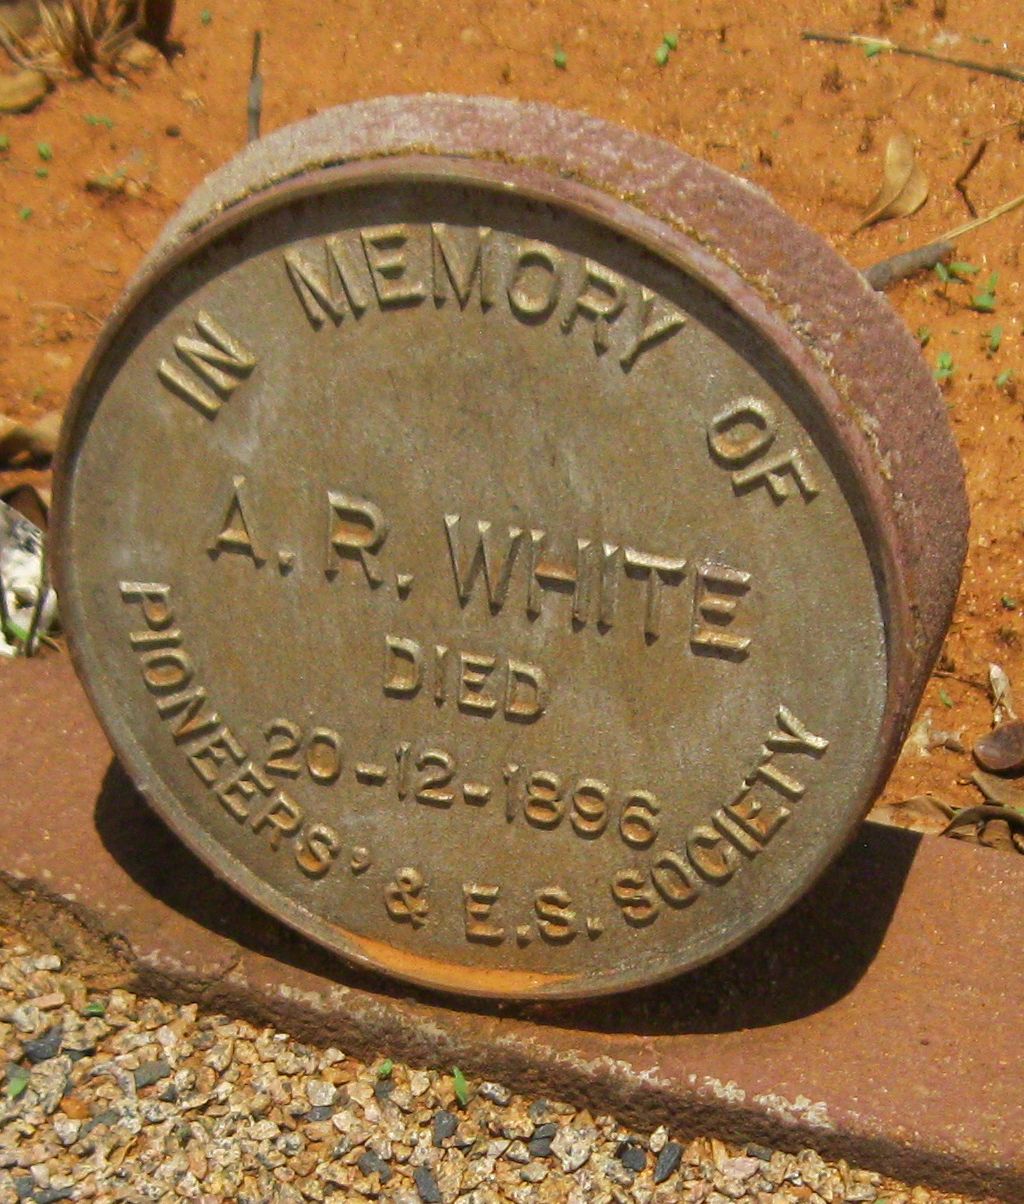 cemeteries_headstone_byo_white_1896